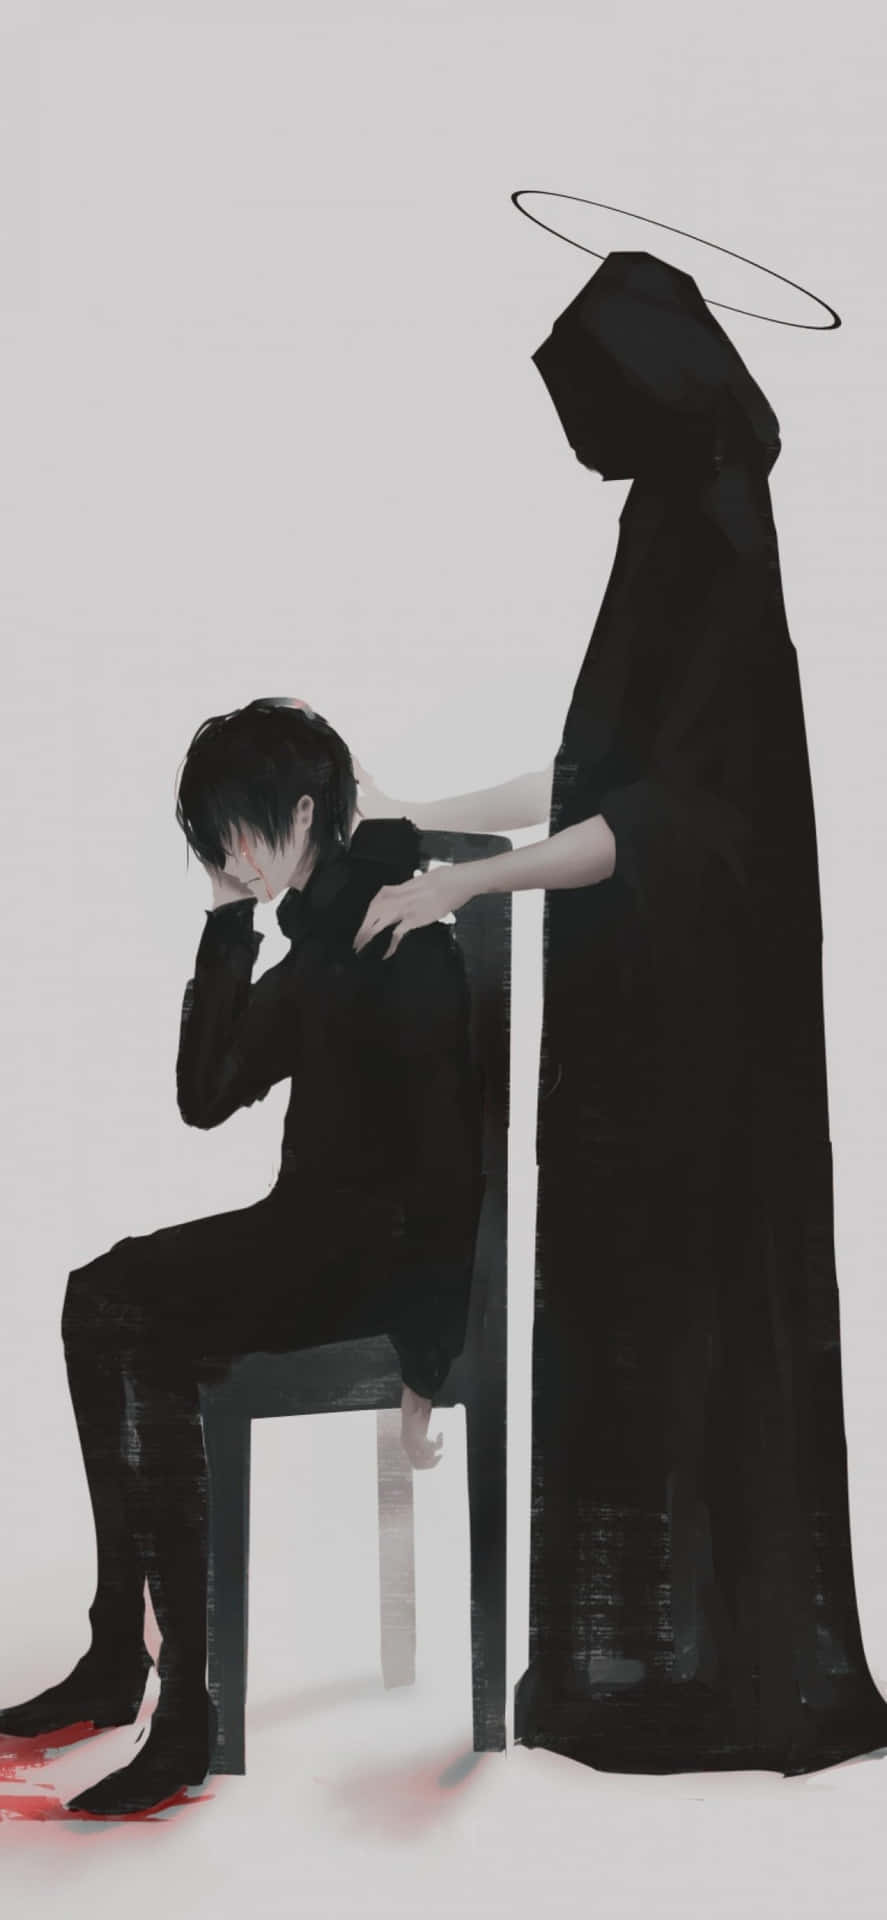 Sad Depressing Anime Boy Crying Grim Reaper Wallpaper